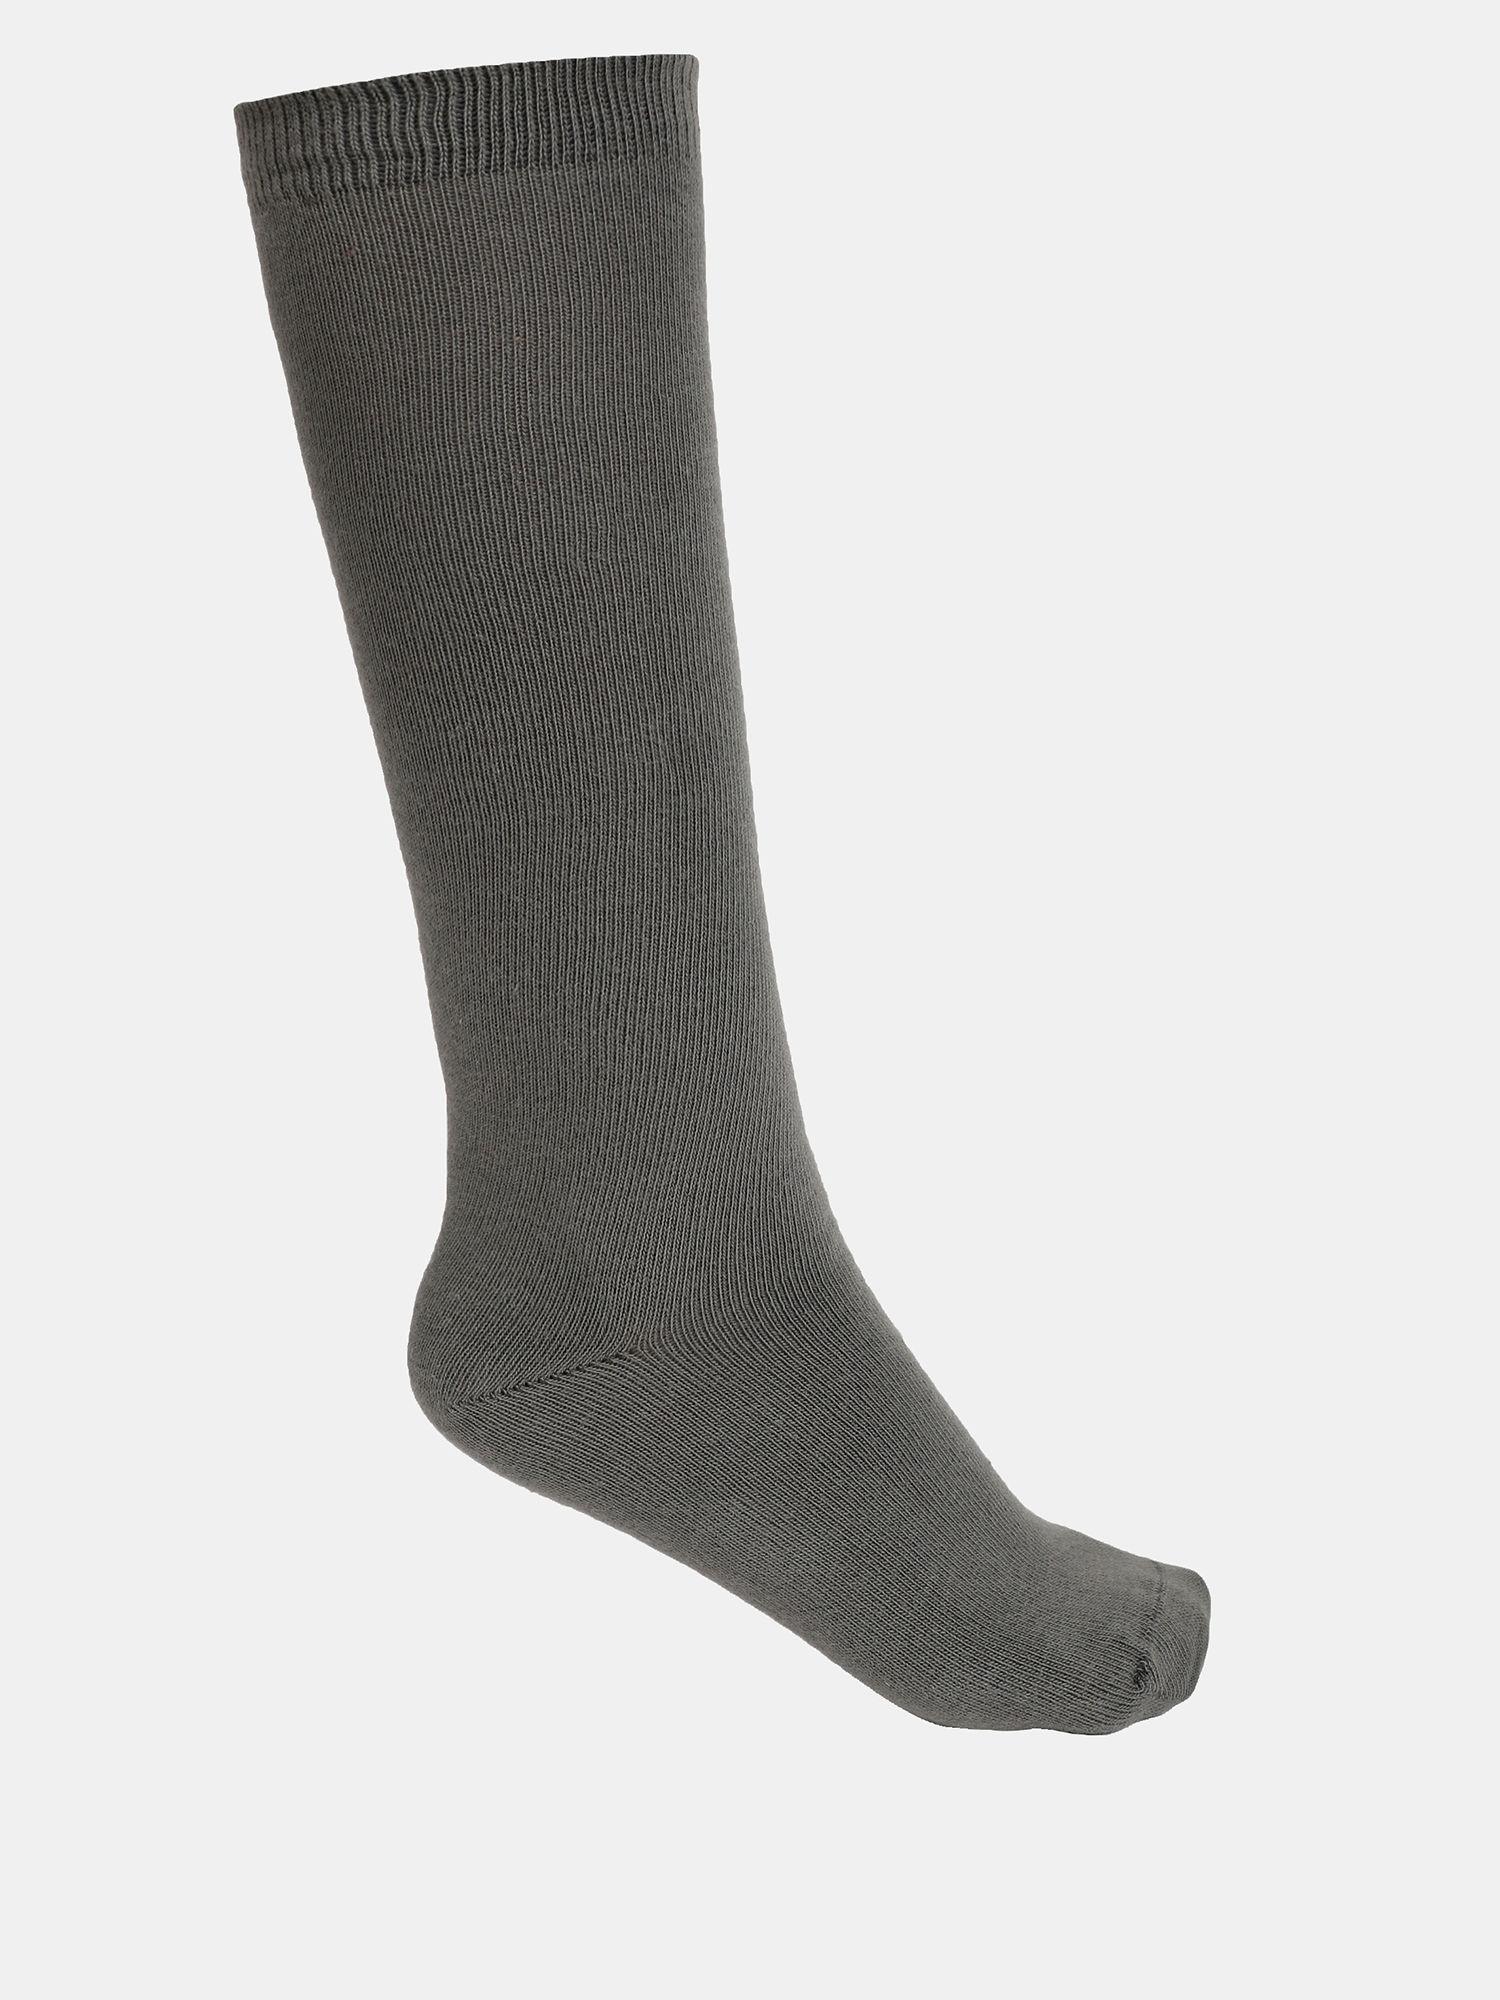 7902 Unisex Cotton Nylon Stretch Knee Length Socks - Gunmetal Grey